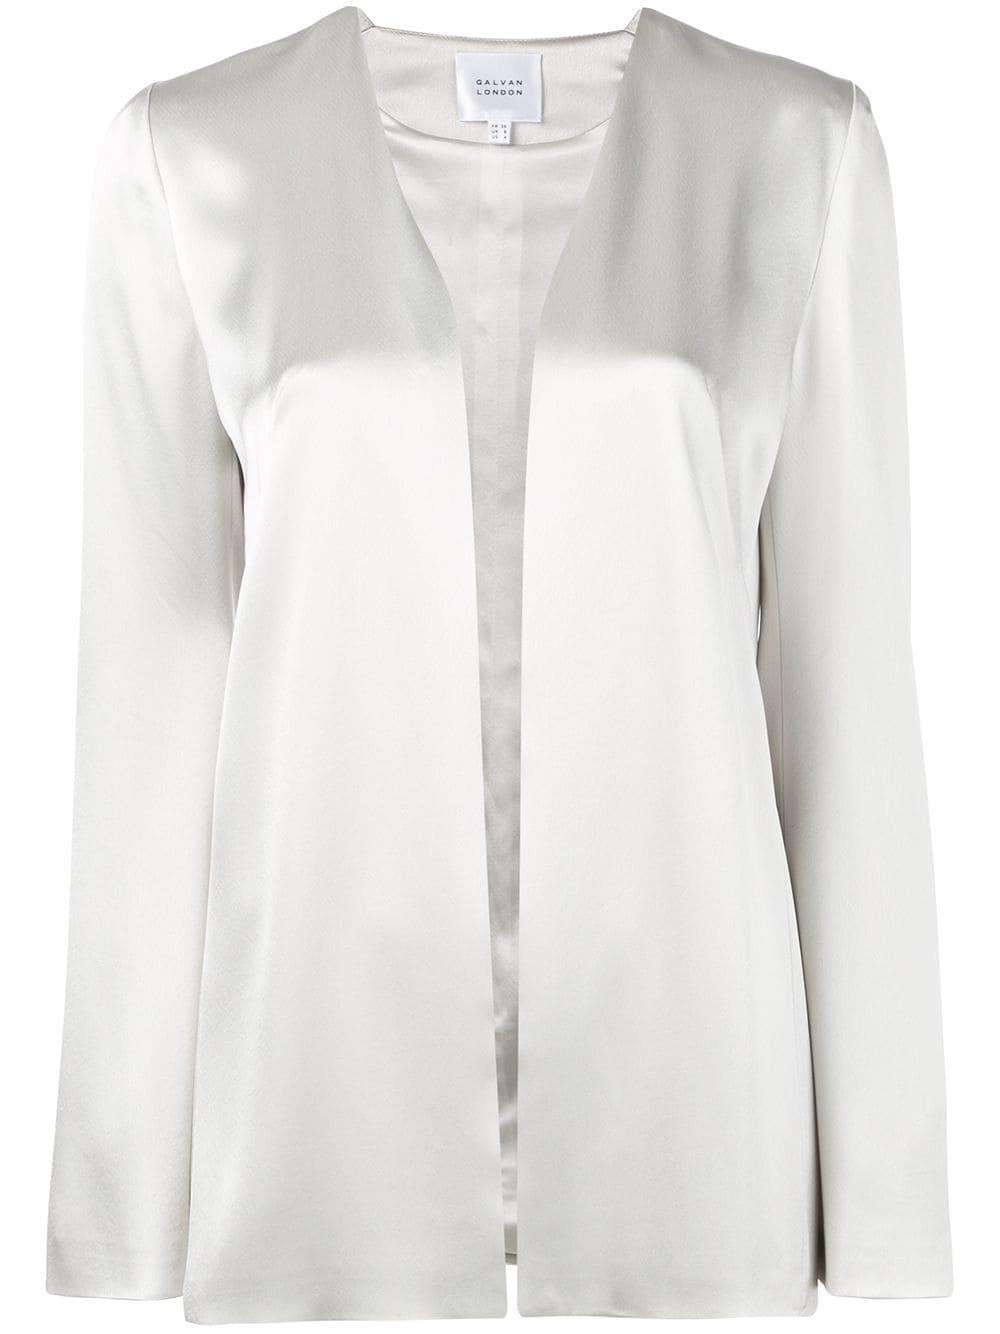 Galvan London Satin Evening Jacket in White - Lyst